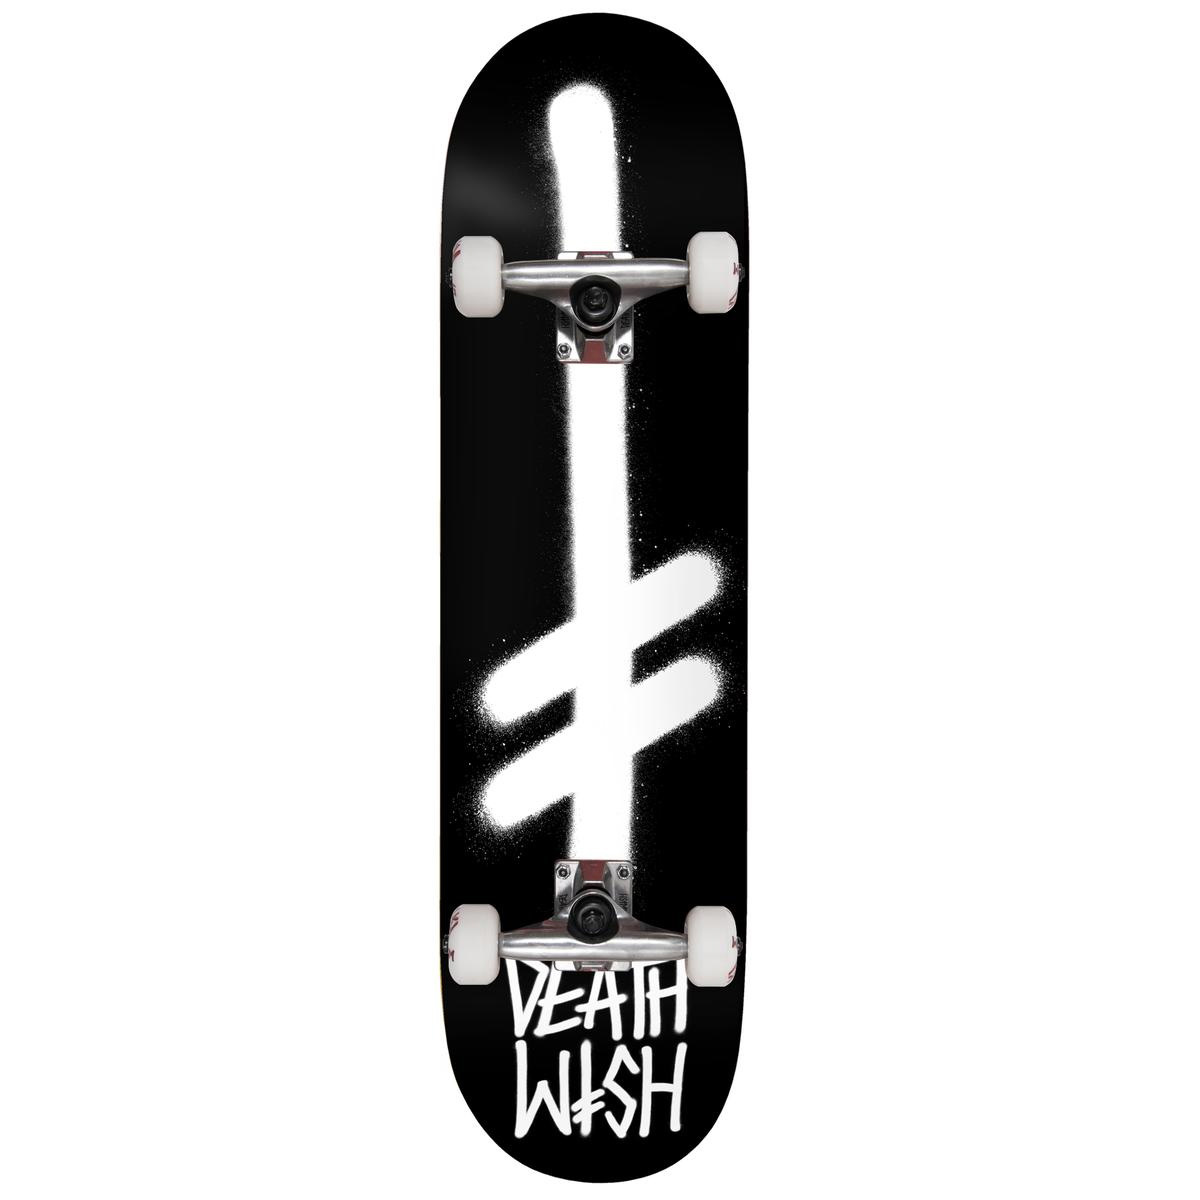 deathwish gang logo 8.25 complete